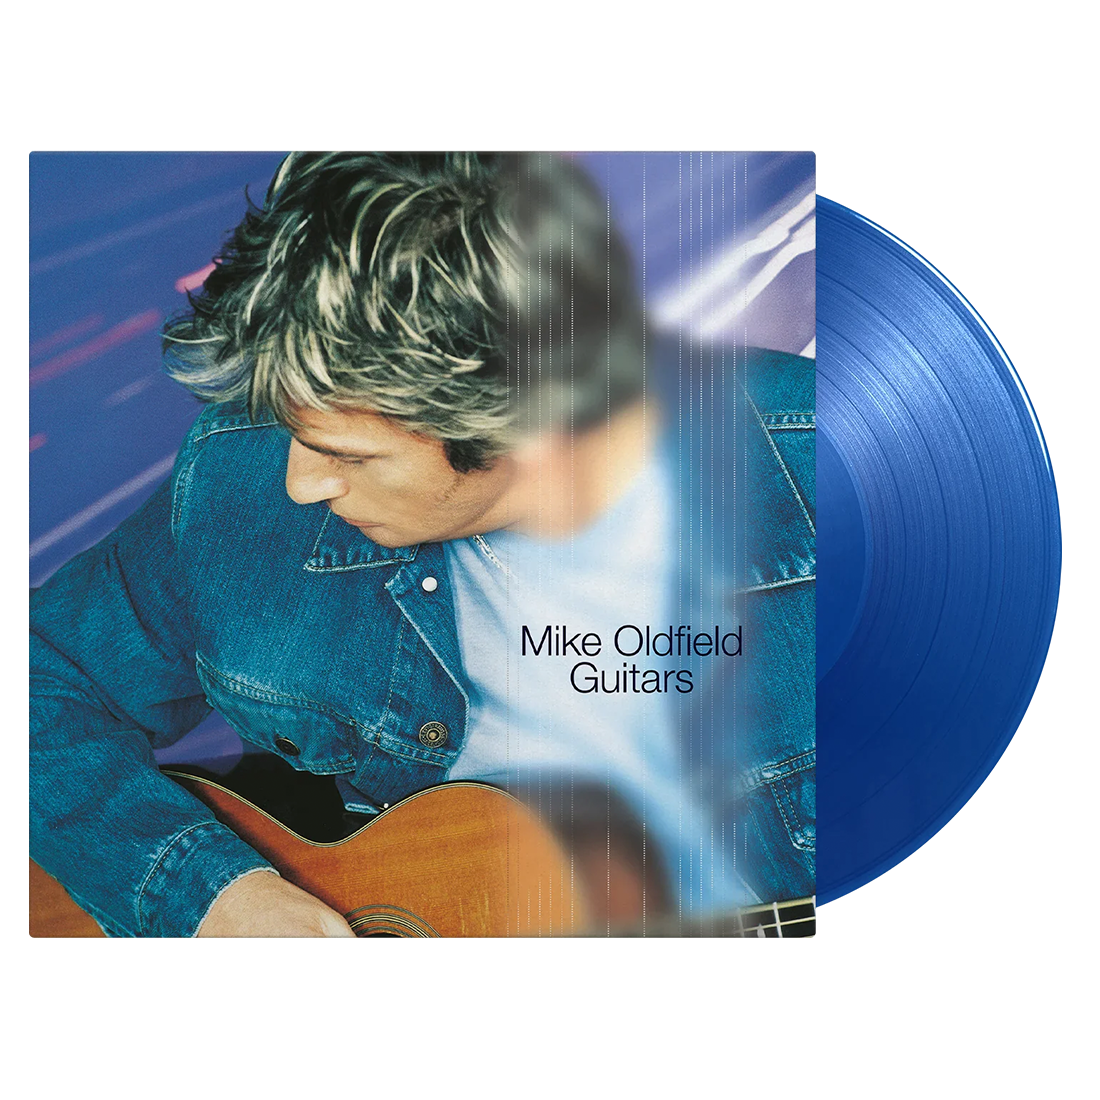 Mike Oldfield - Guitars: Limited Blue Vinyl LP